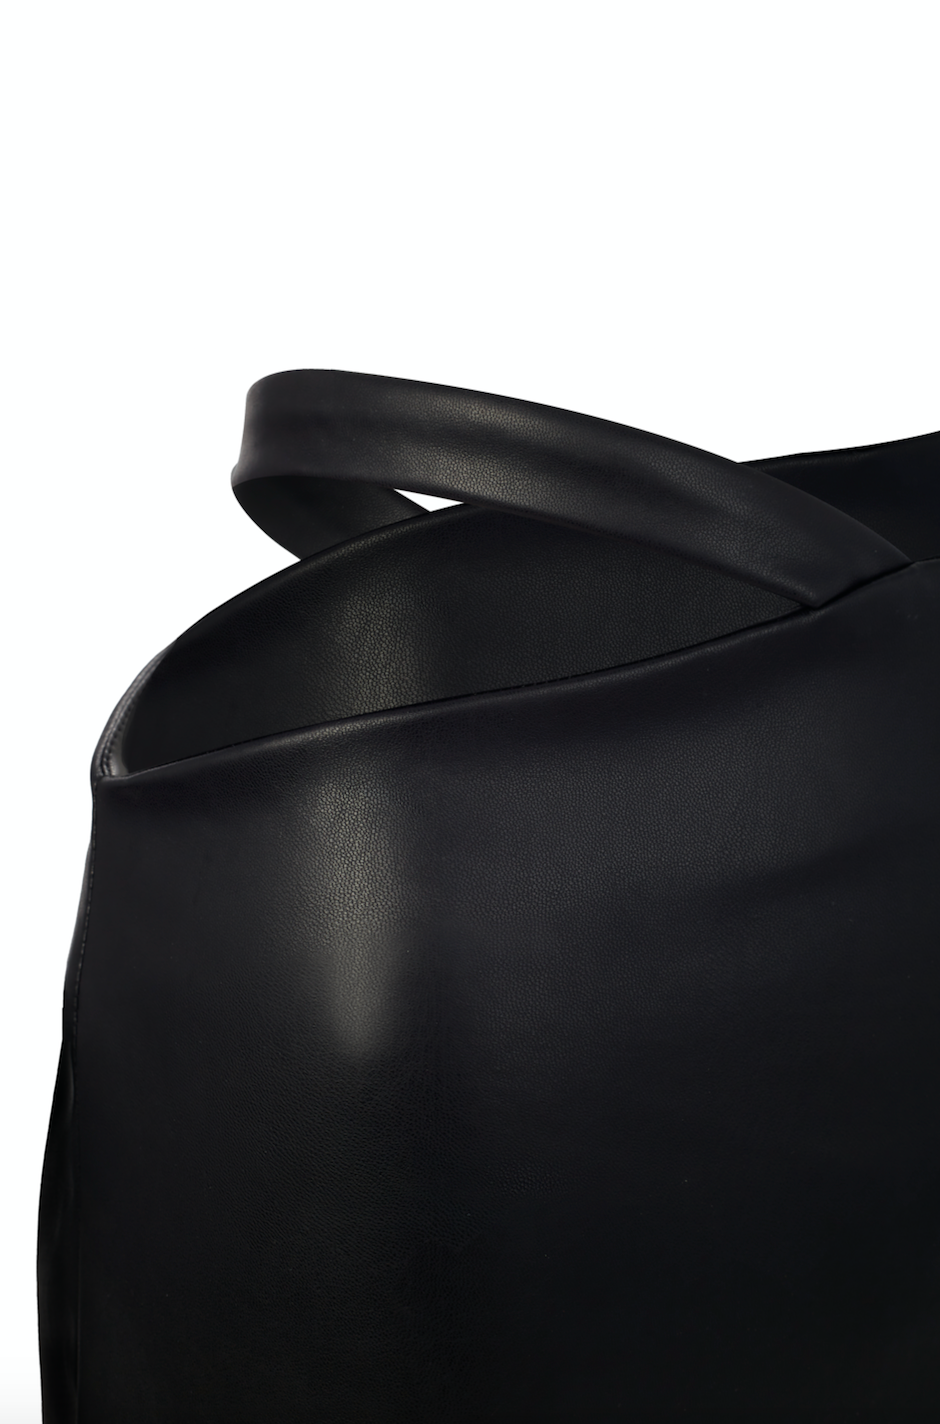 Asymmetrical faux leather midi skirt with waist band.